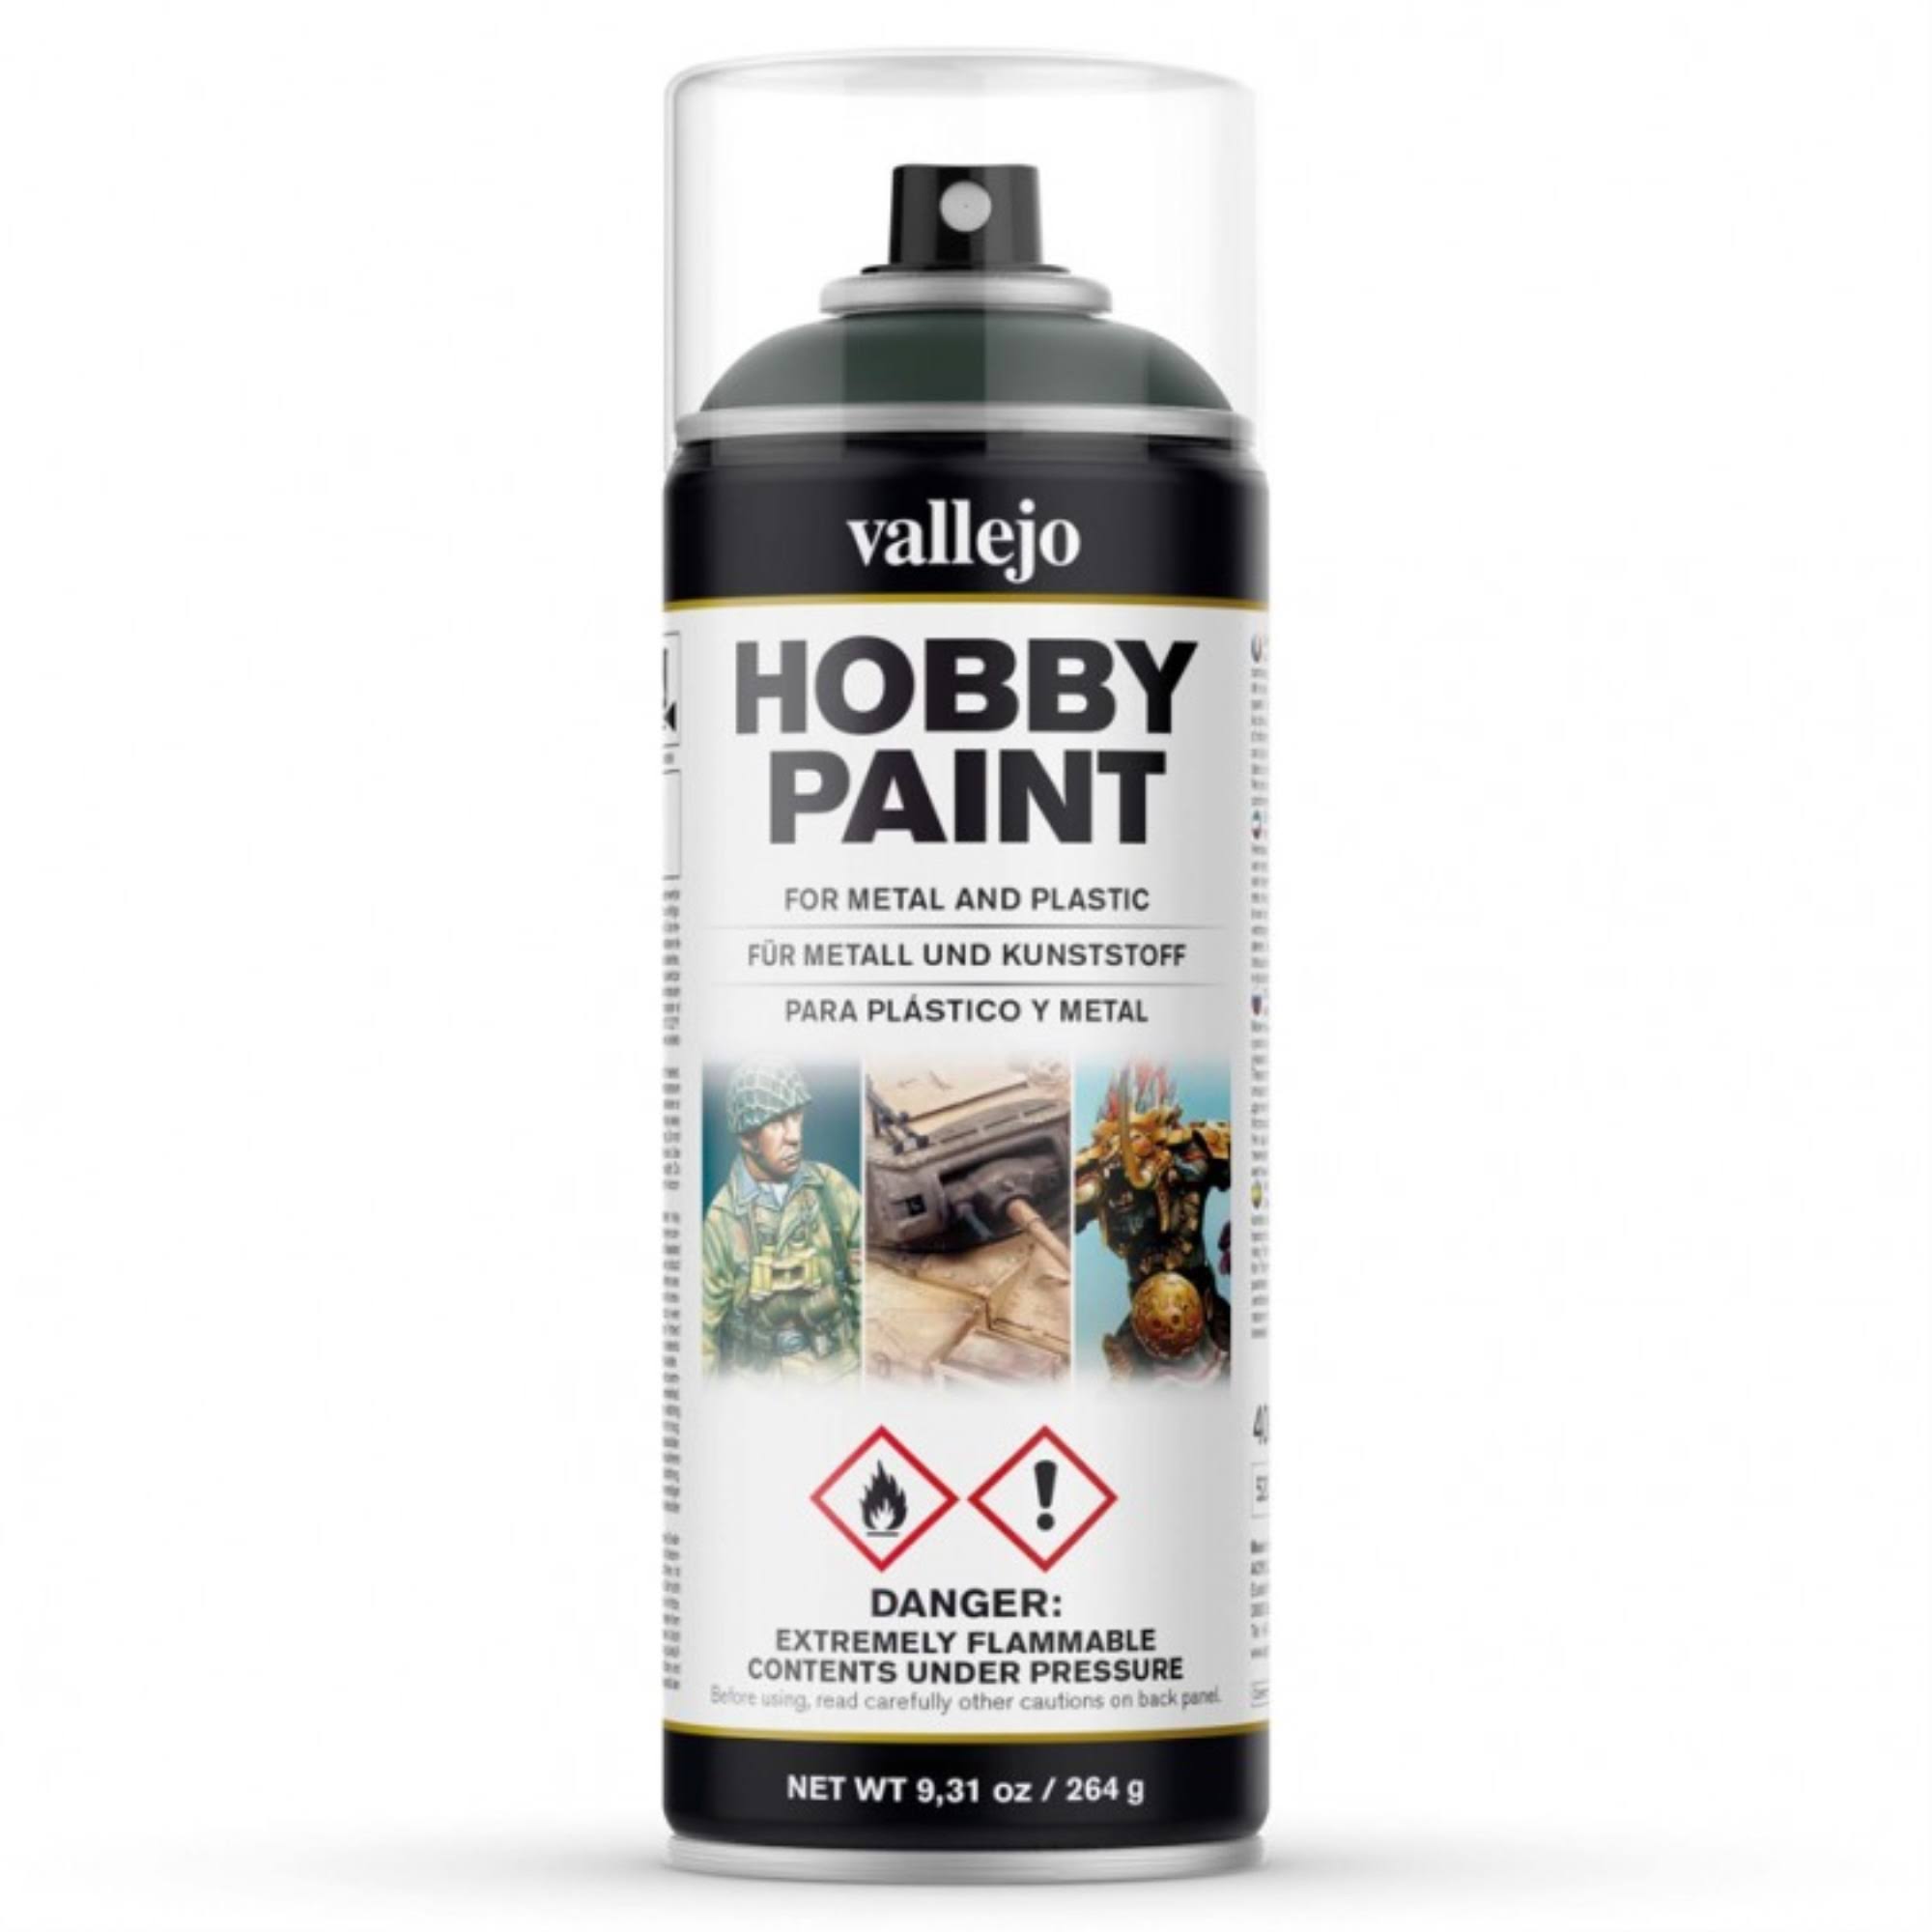 Vallejo Hobby Paint Spray - Dark Green, 400ml